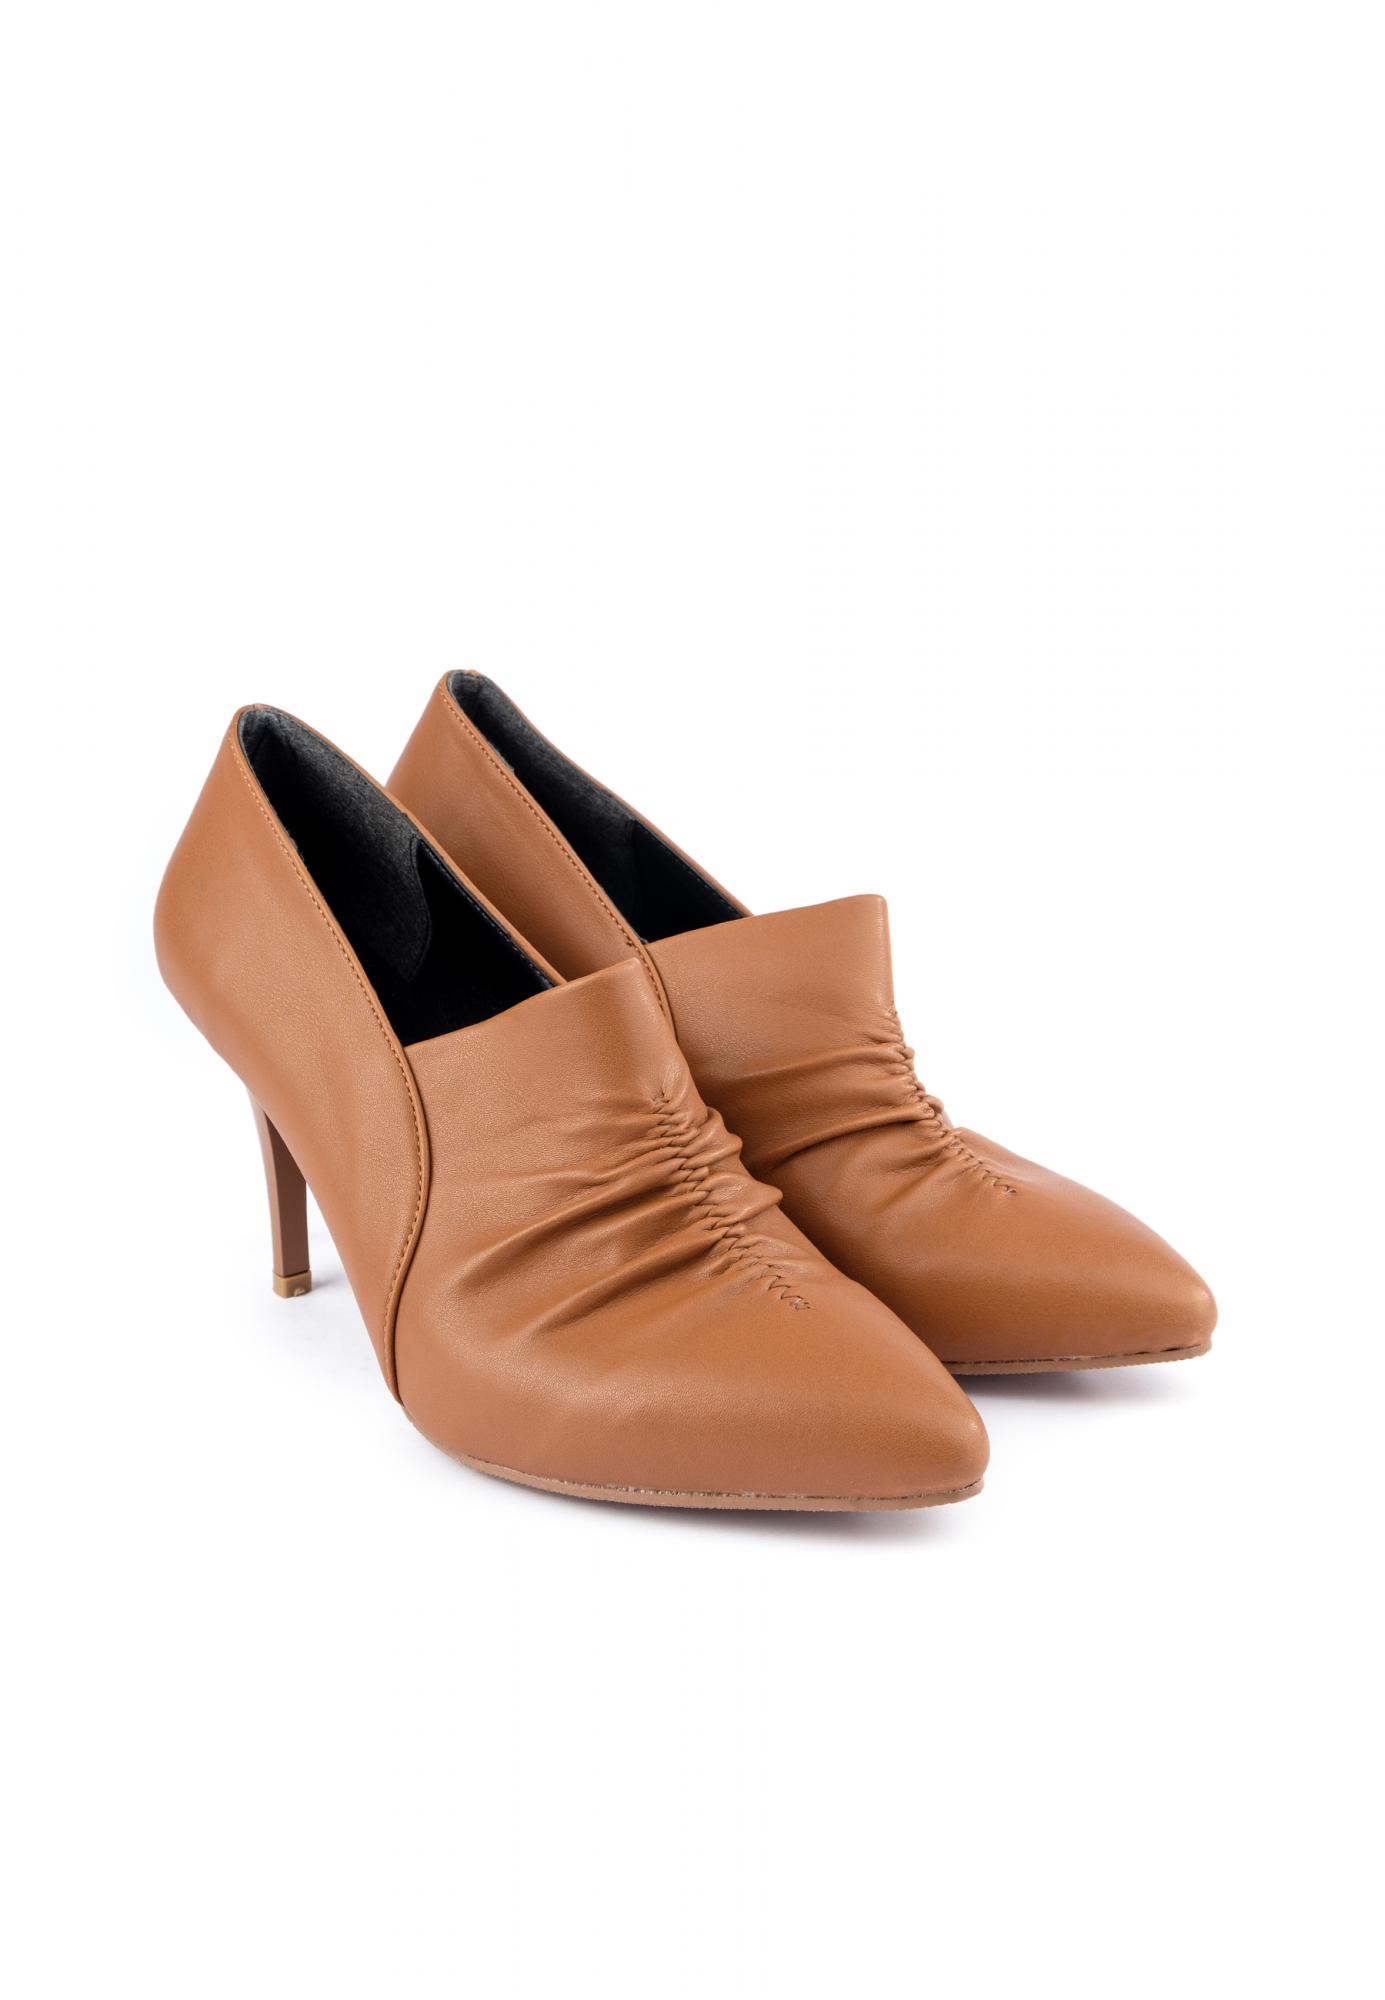 Ženske cipele D280 - KAMEL